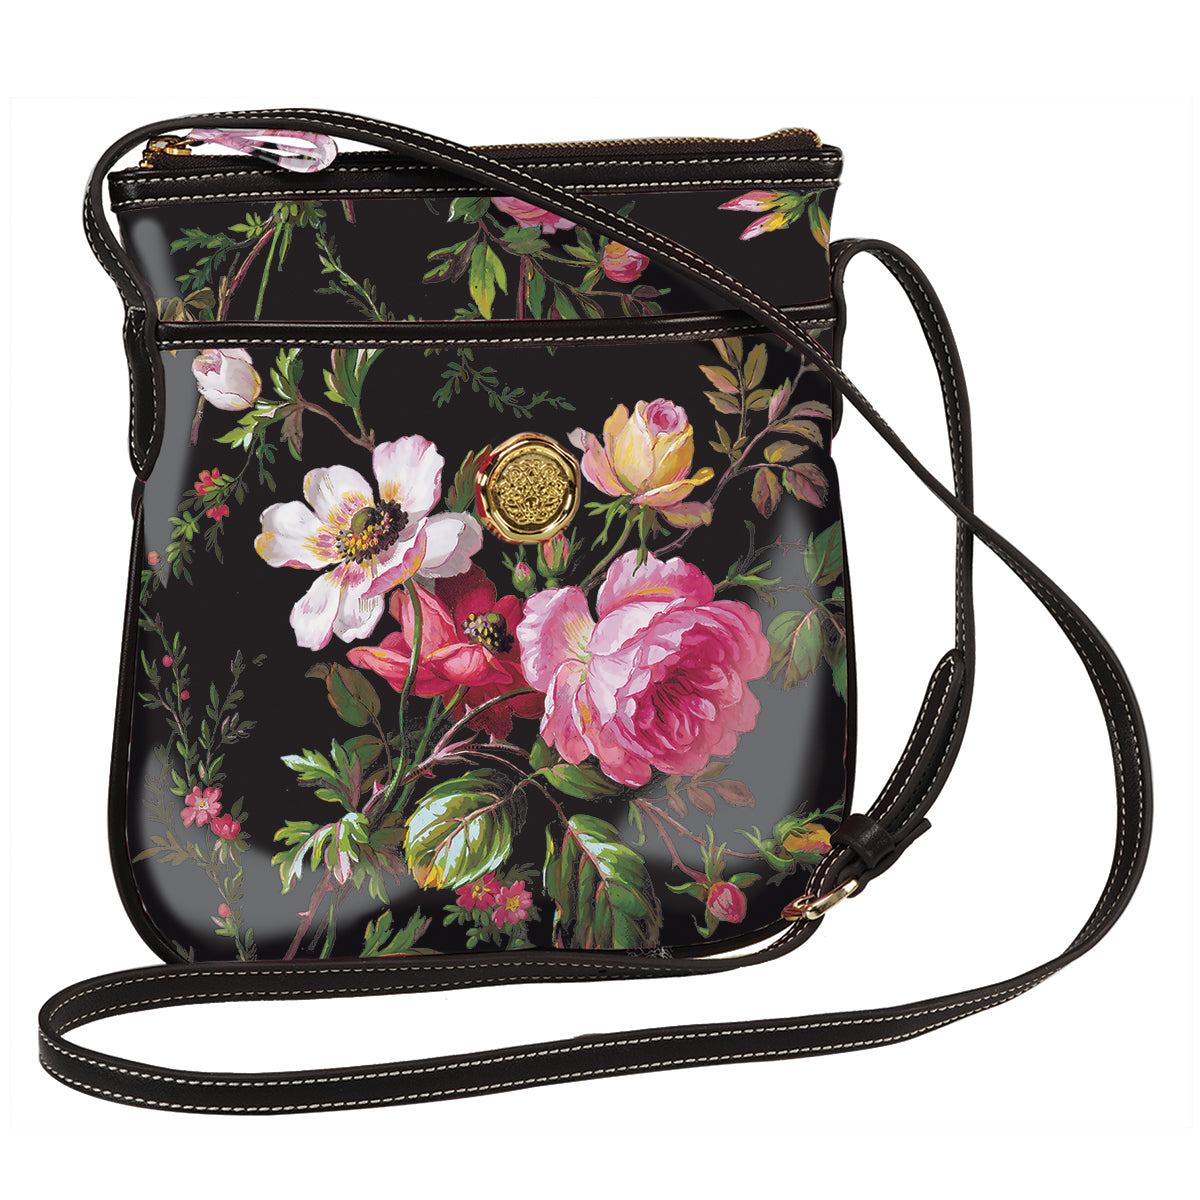 a black floral purse with a black strap.